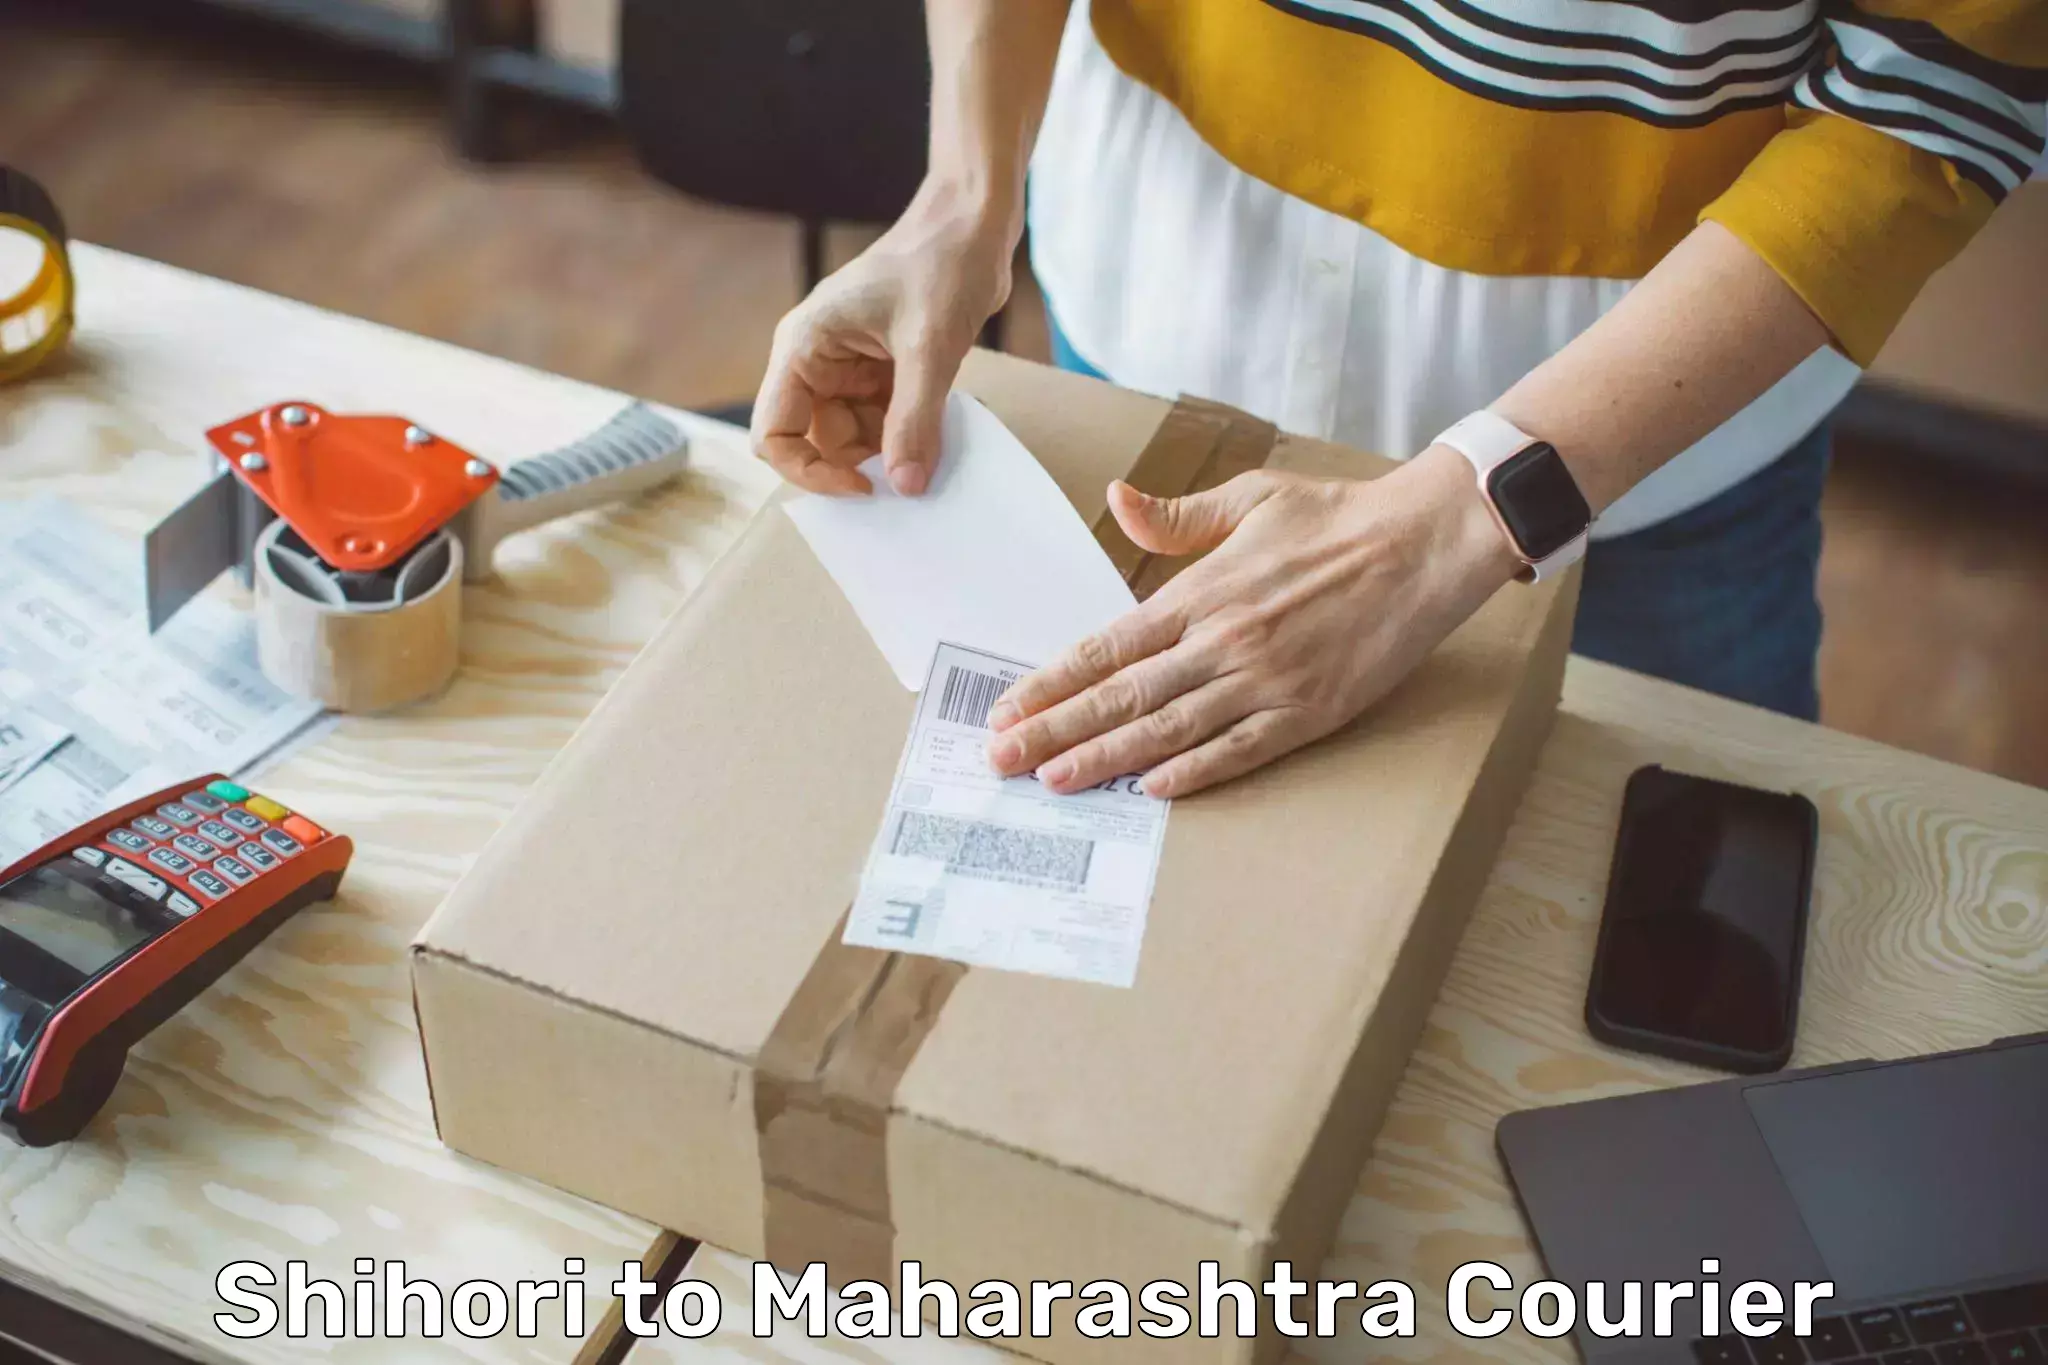 Full-service courier options Shihori to Maharashtra